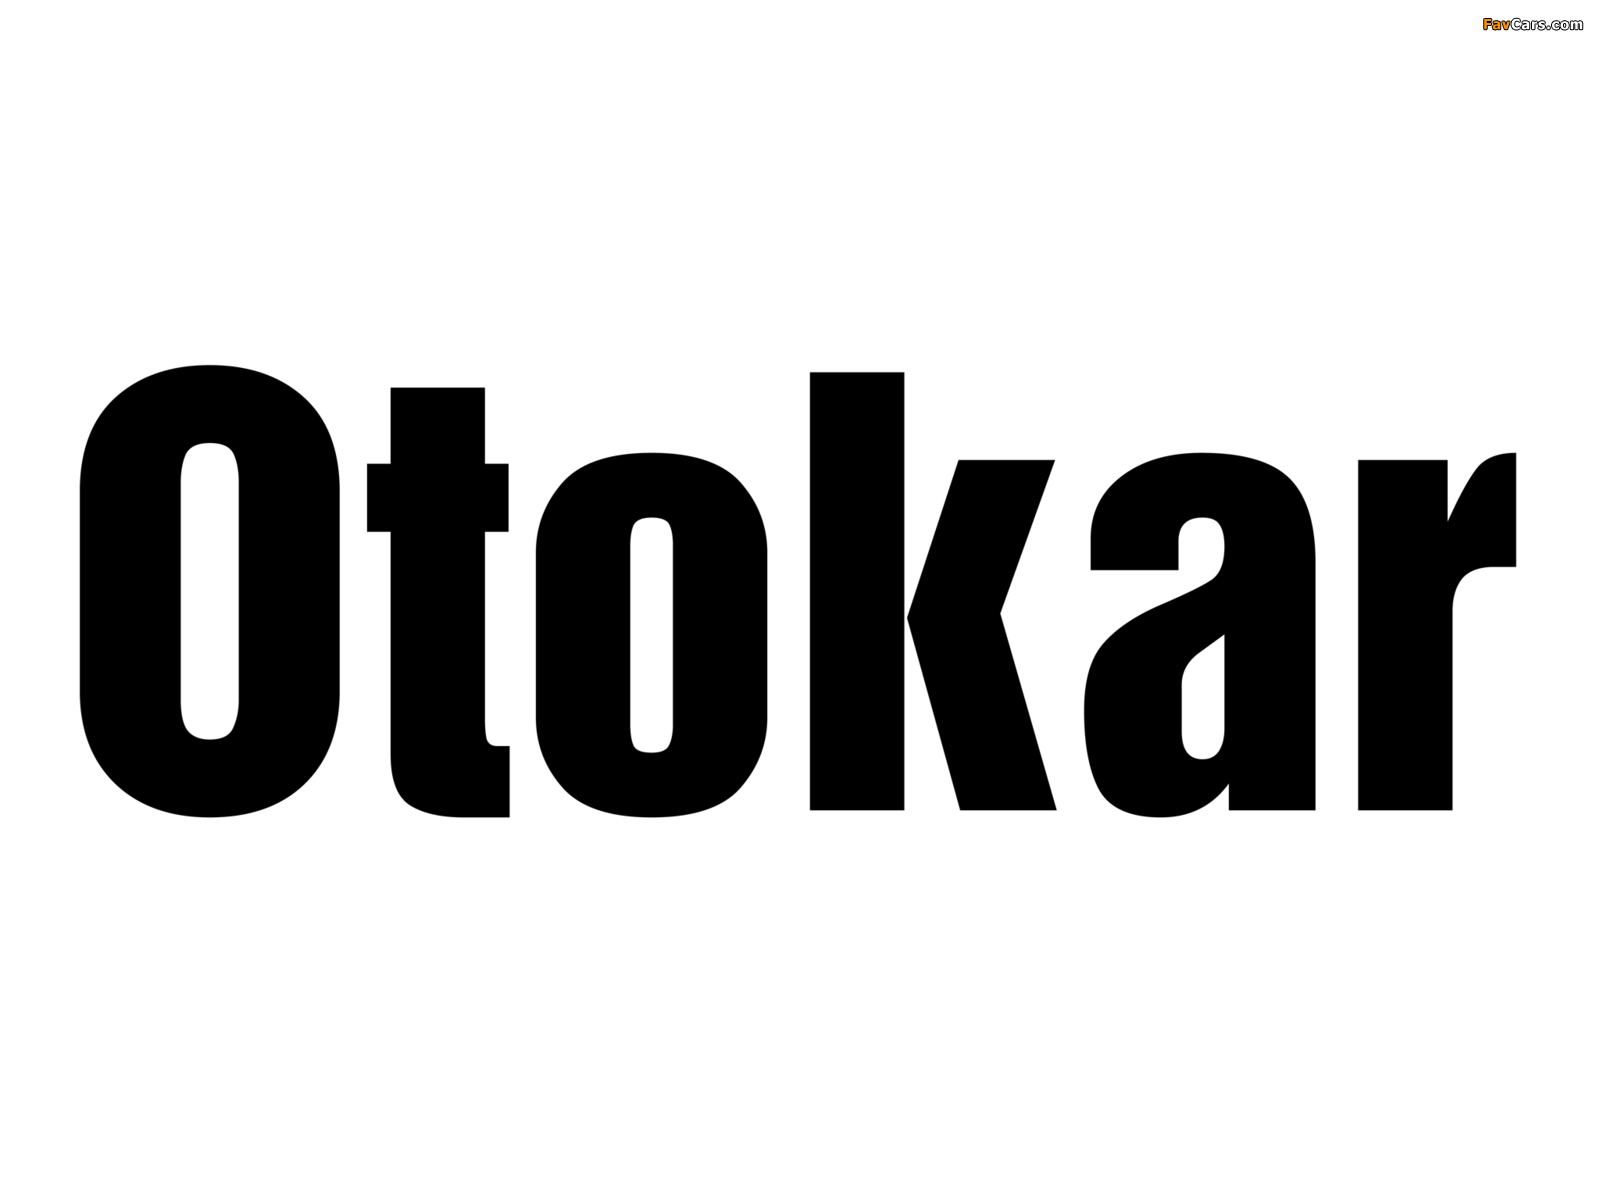 Otokar images (1600 x 1200)